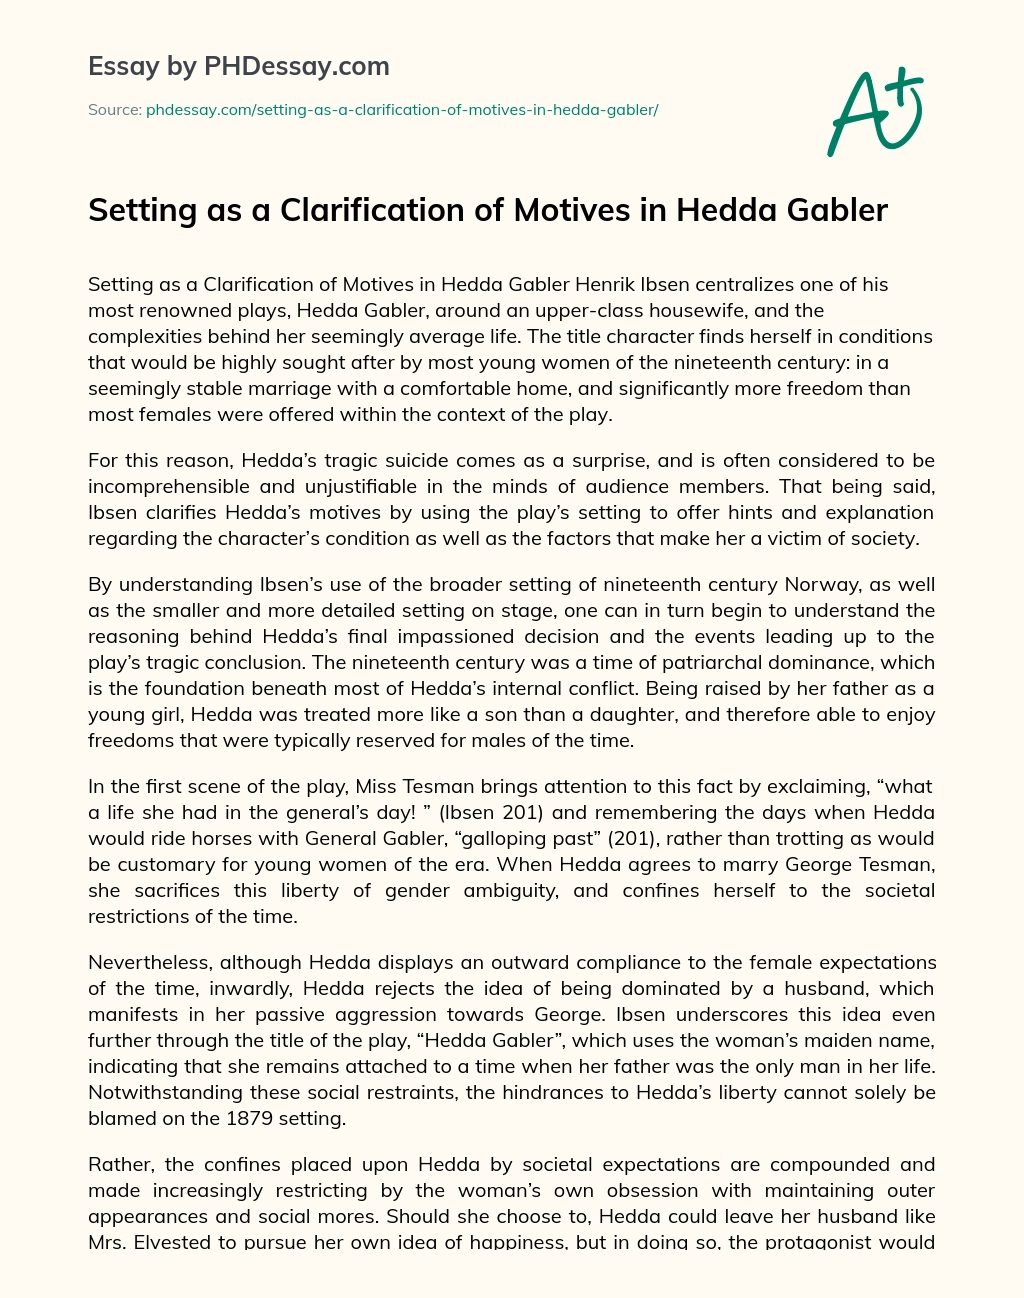 Setting as a Clarification of Motives in Hedda Gabler essay